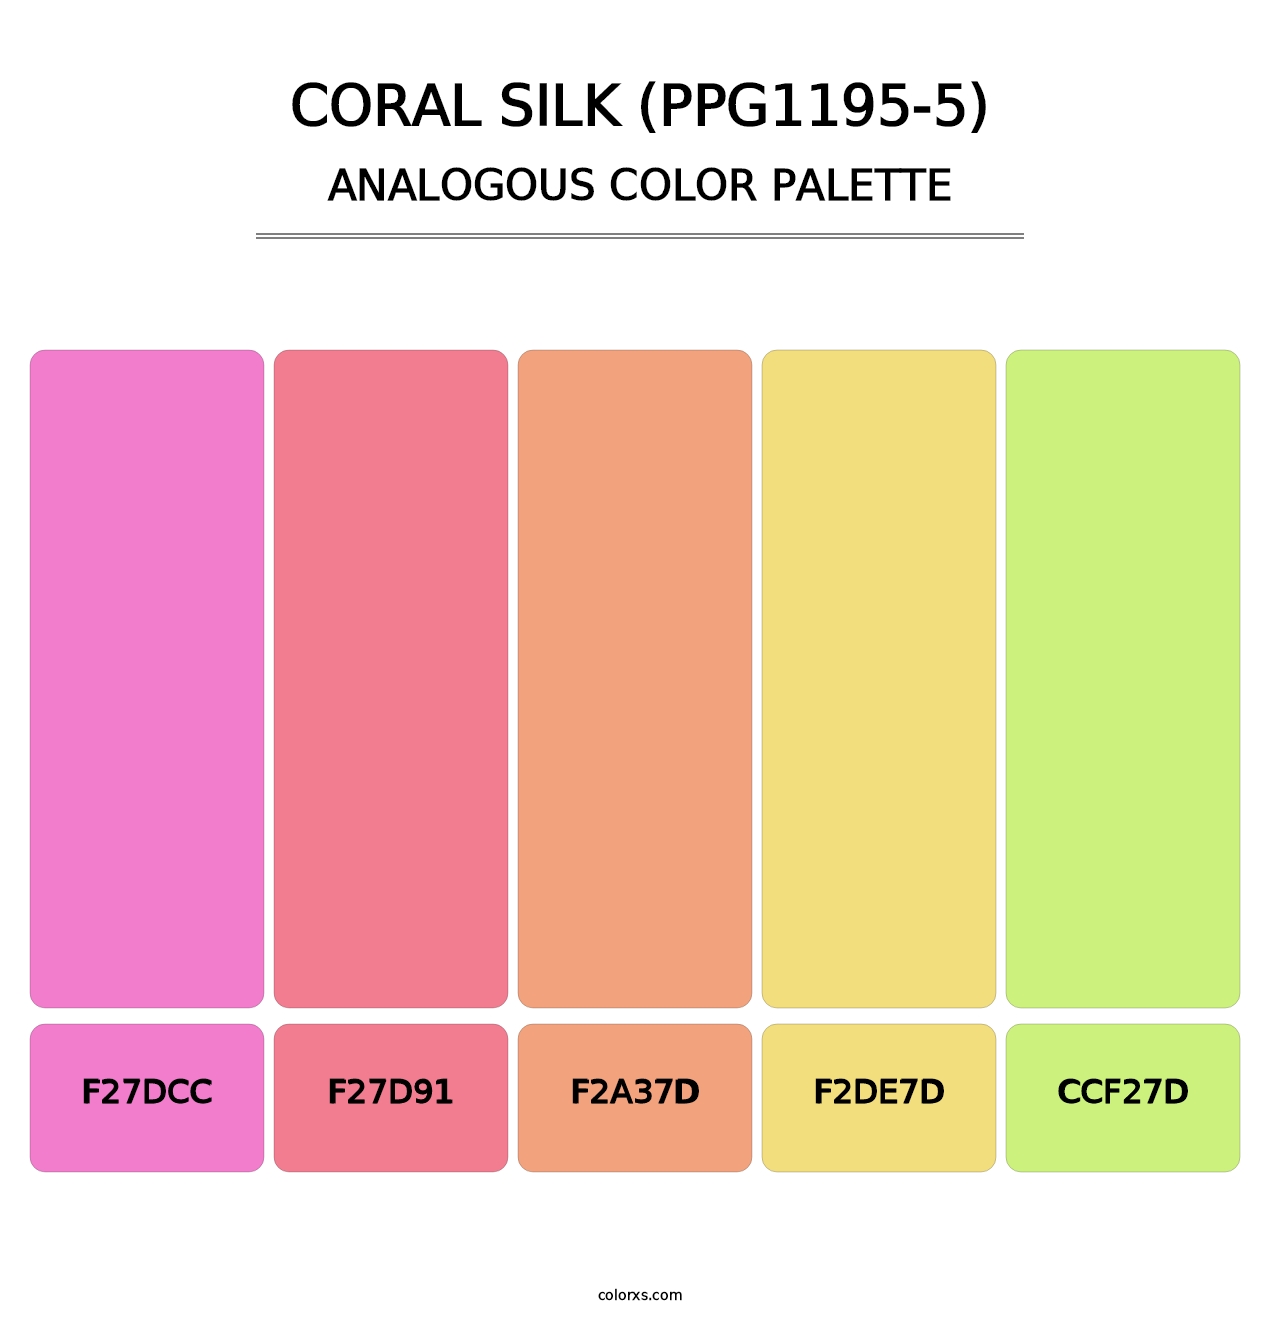 Coral Silk (PPG1195-5) - Analogous Color Palette